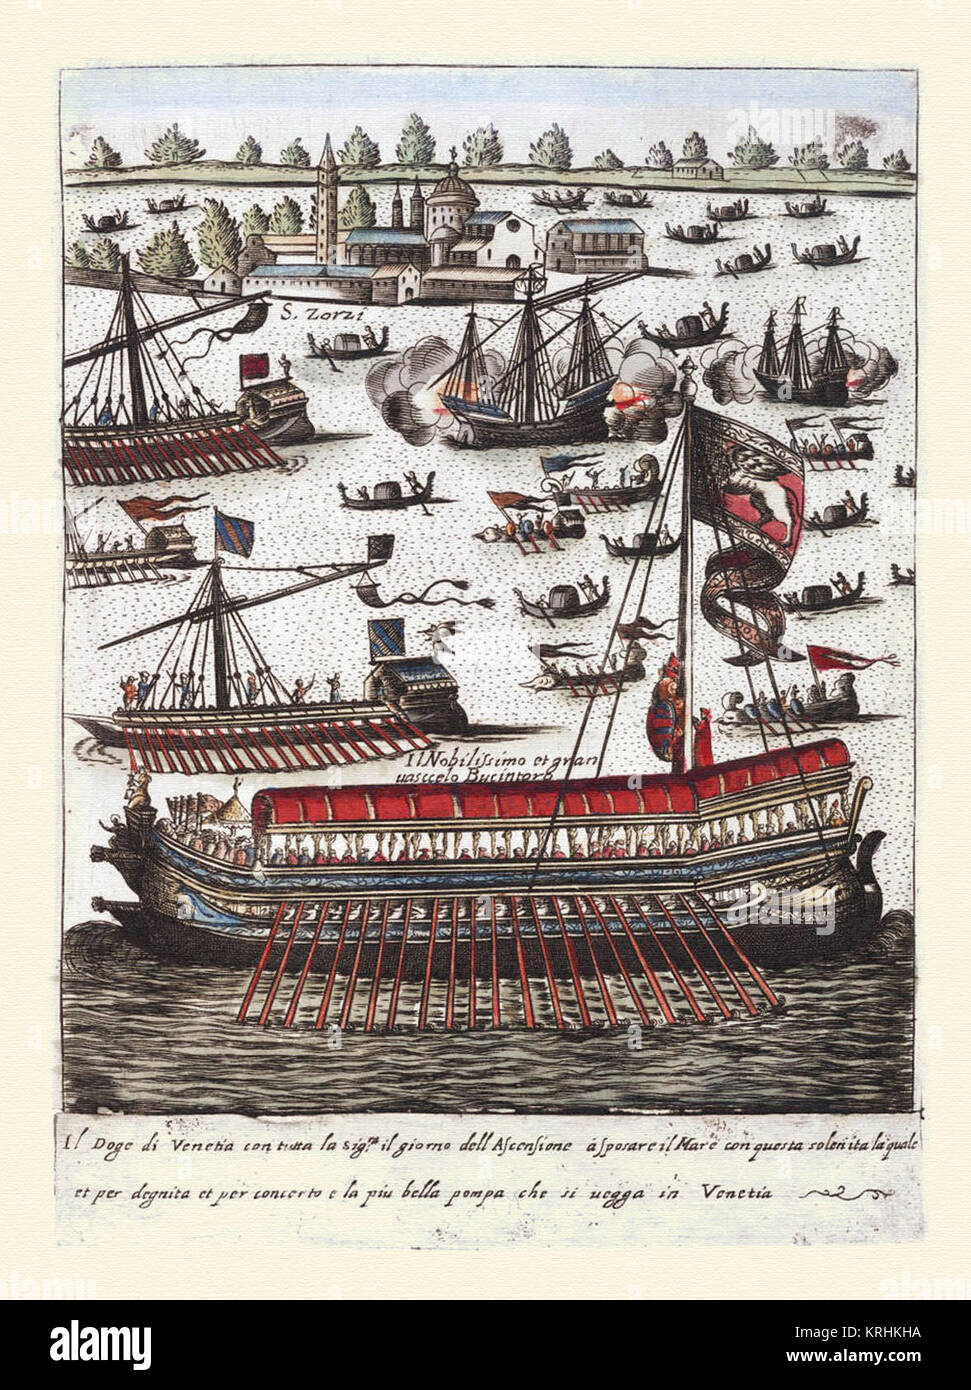 Cortejo del Dux & Honoratioren De Venecia el Dia de la Ascension-Habiti d'hvomeni et Donne venetiane 1609 Stockfoto